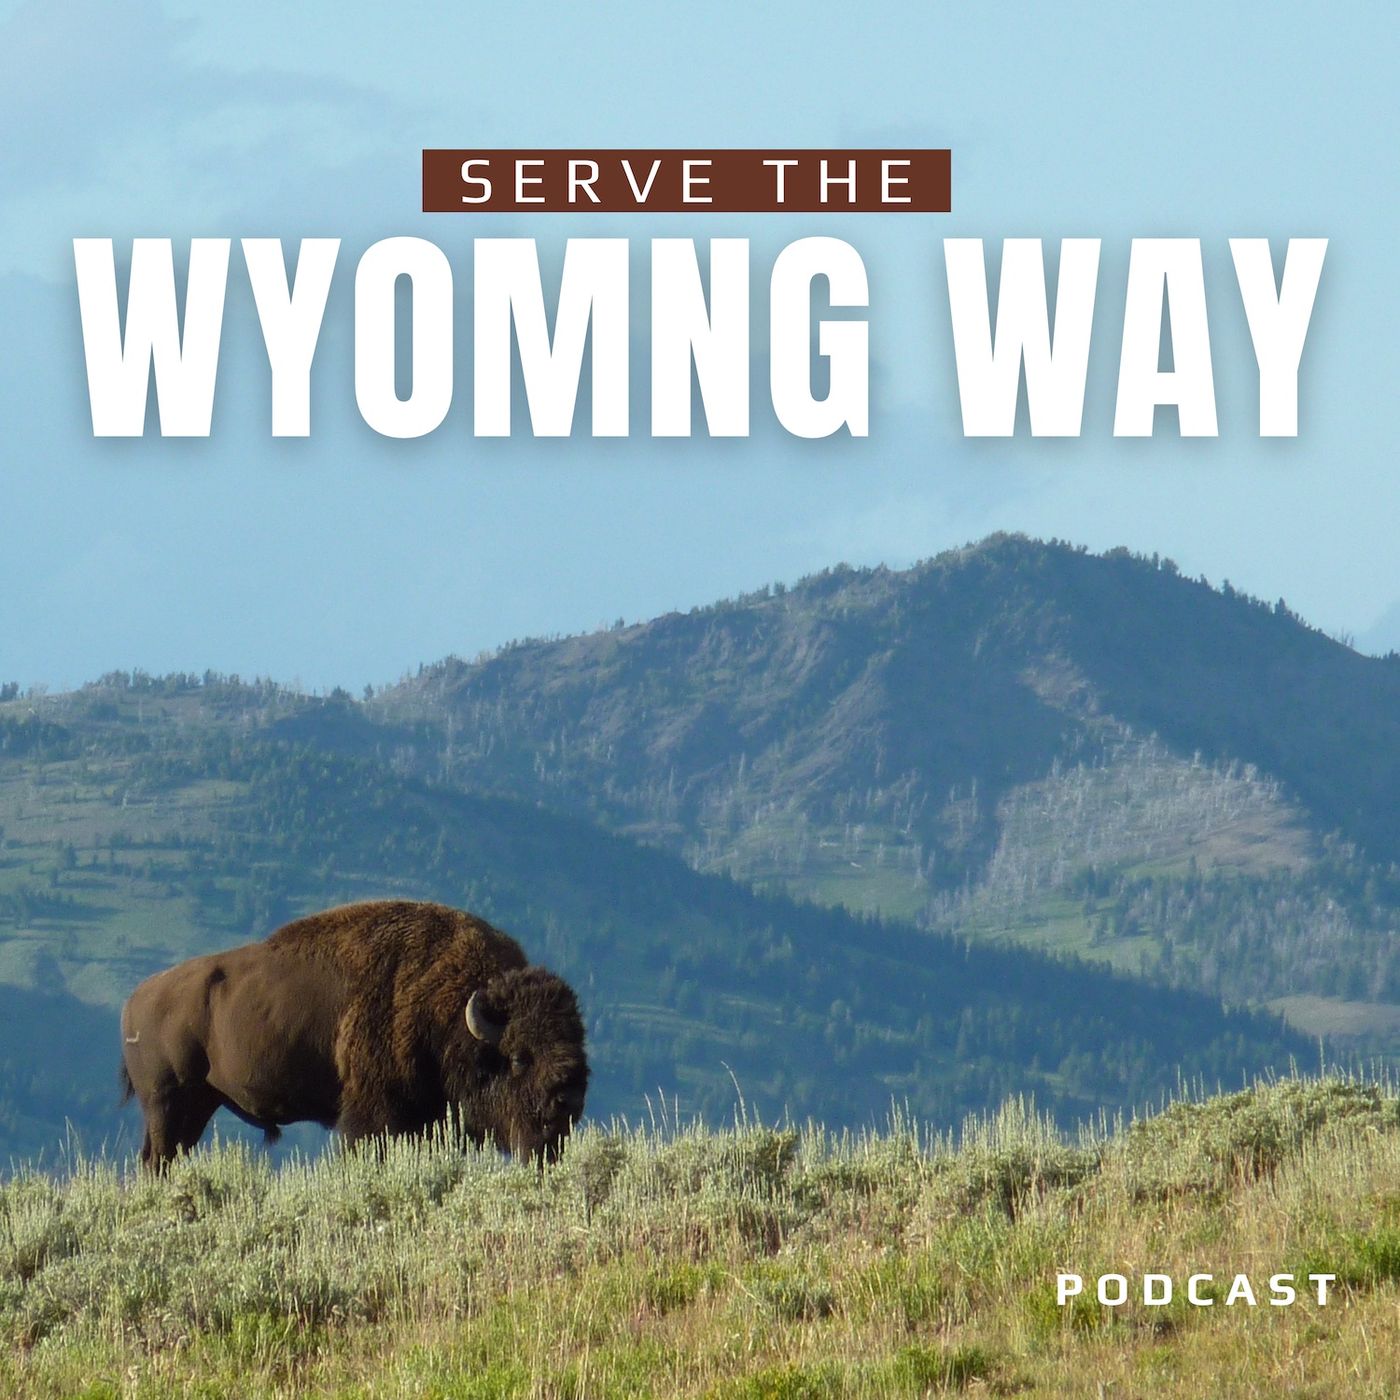 Serve the Wyoming Way